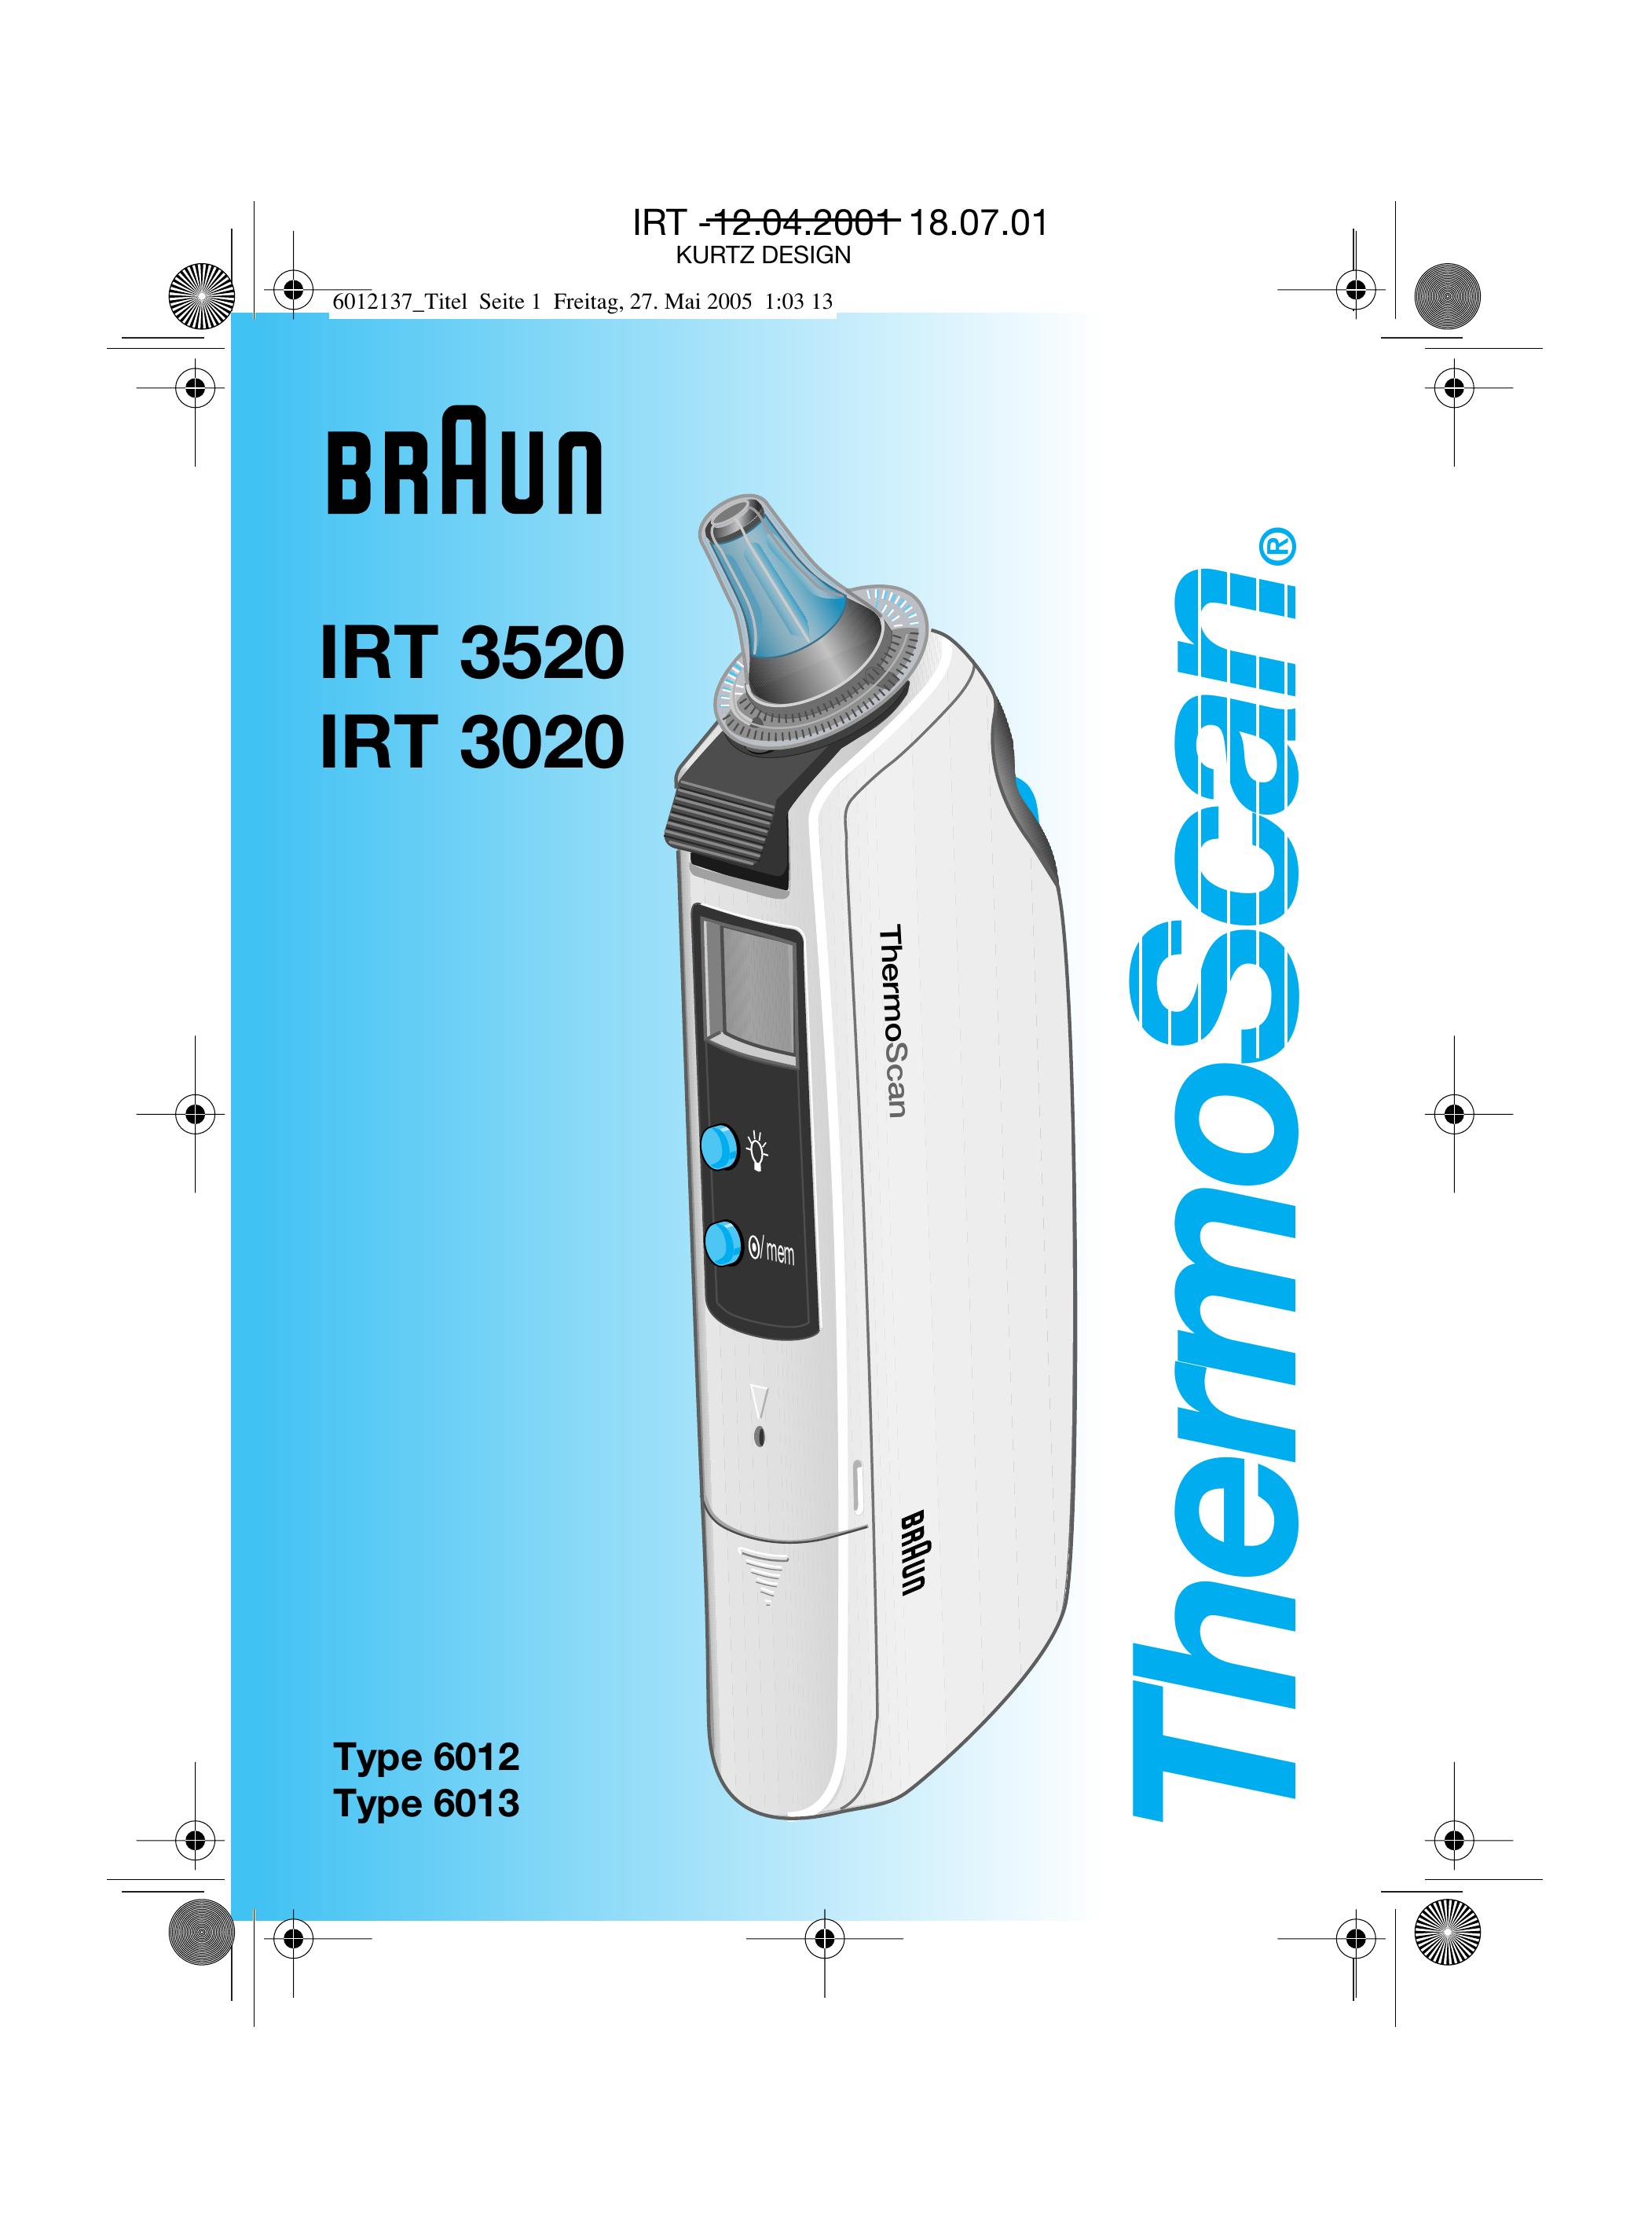 Braun IRT 3020 Thermometer User Manual